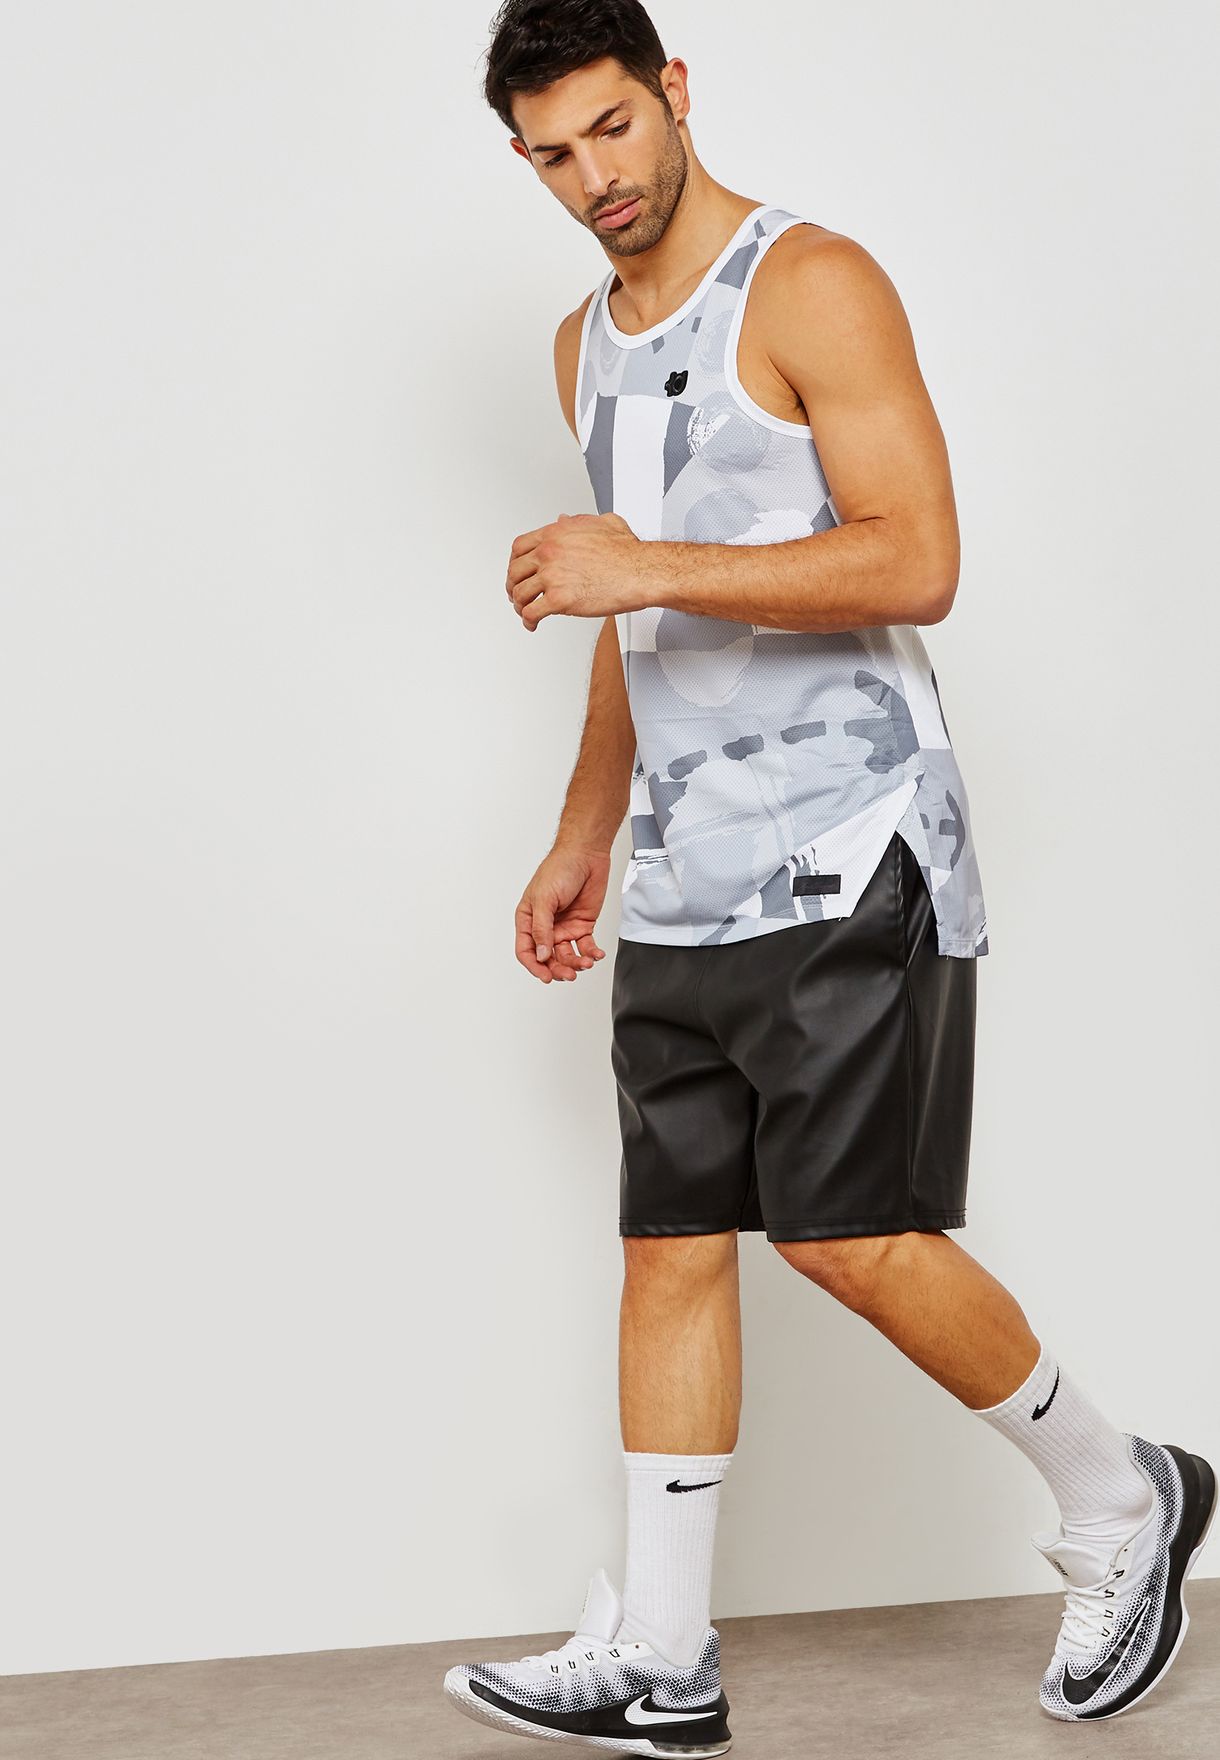 Buy Nike prints KD Hyper Elite Vest for 